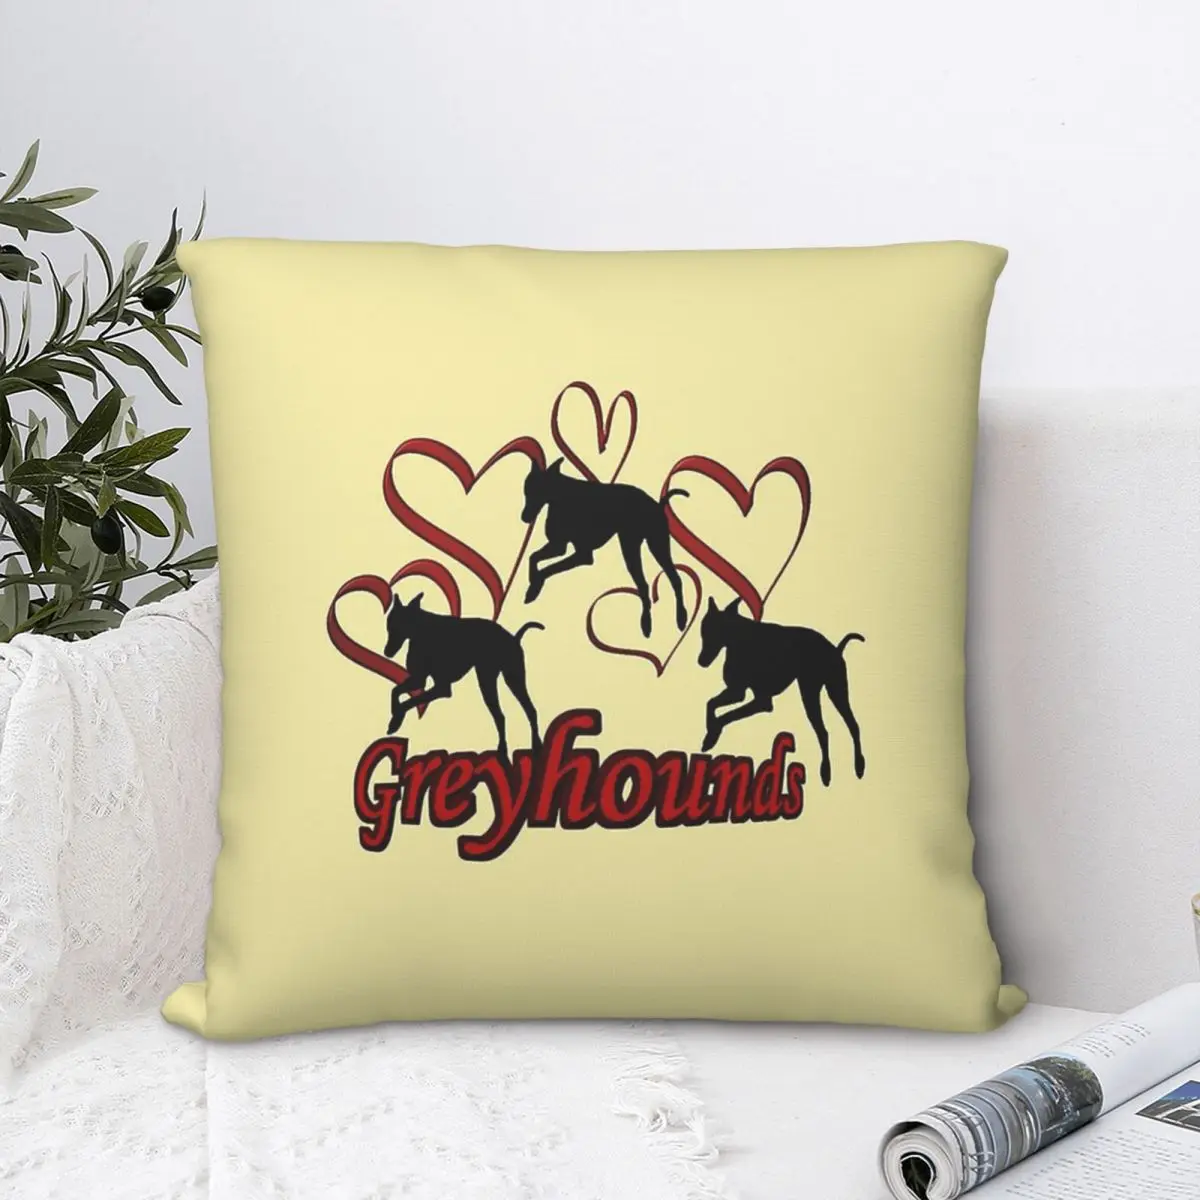 

Silhouettes Red Hearts Throw Pillow Case Geryhound Greyhounds Dog Cushion Home Sofa Chair Print Decorative Hug Pillowcase